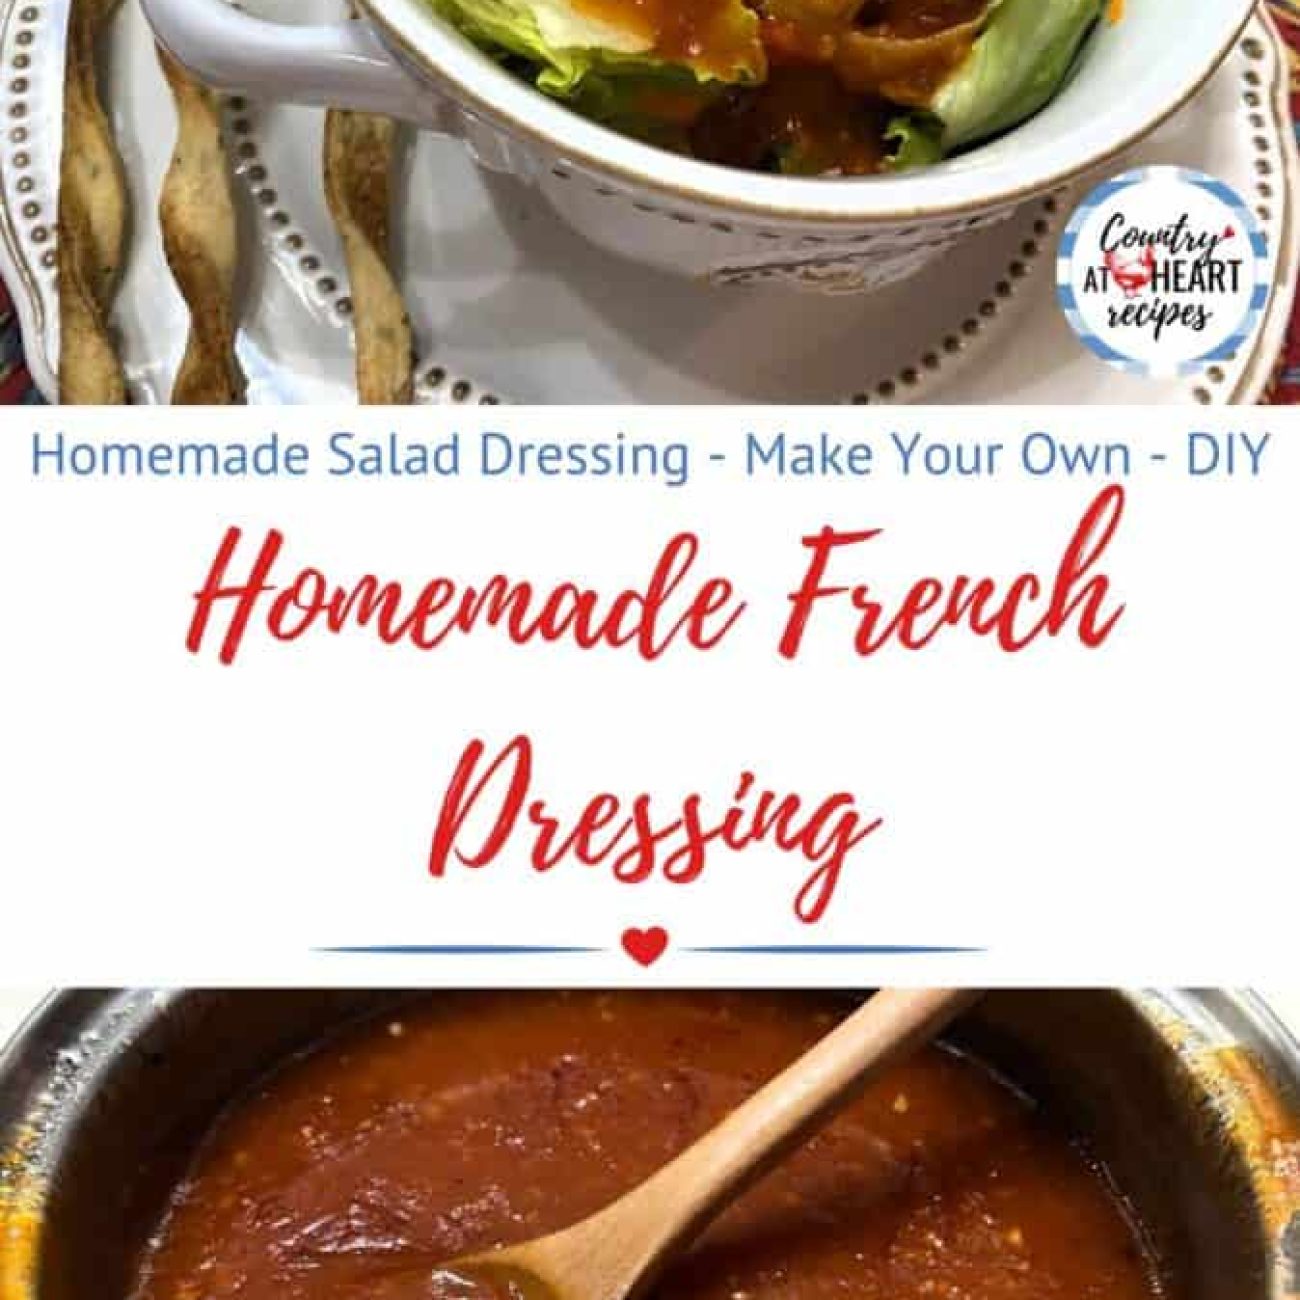 Homemade Sweet French Dressing Recipe